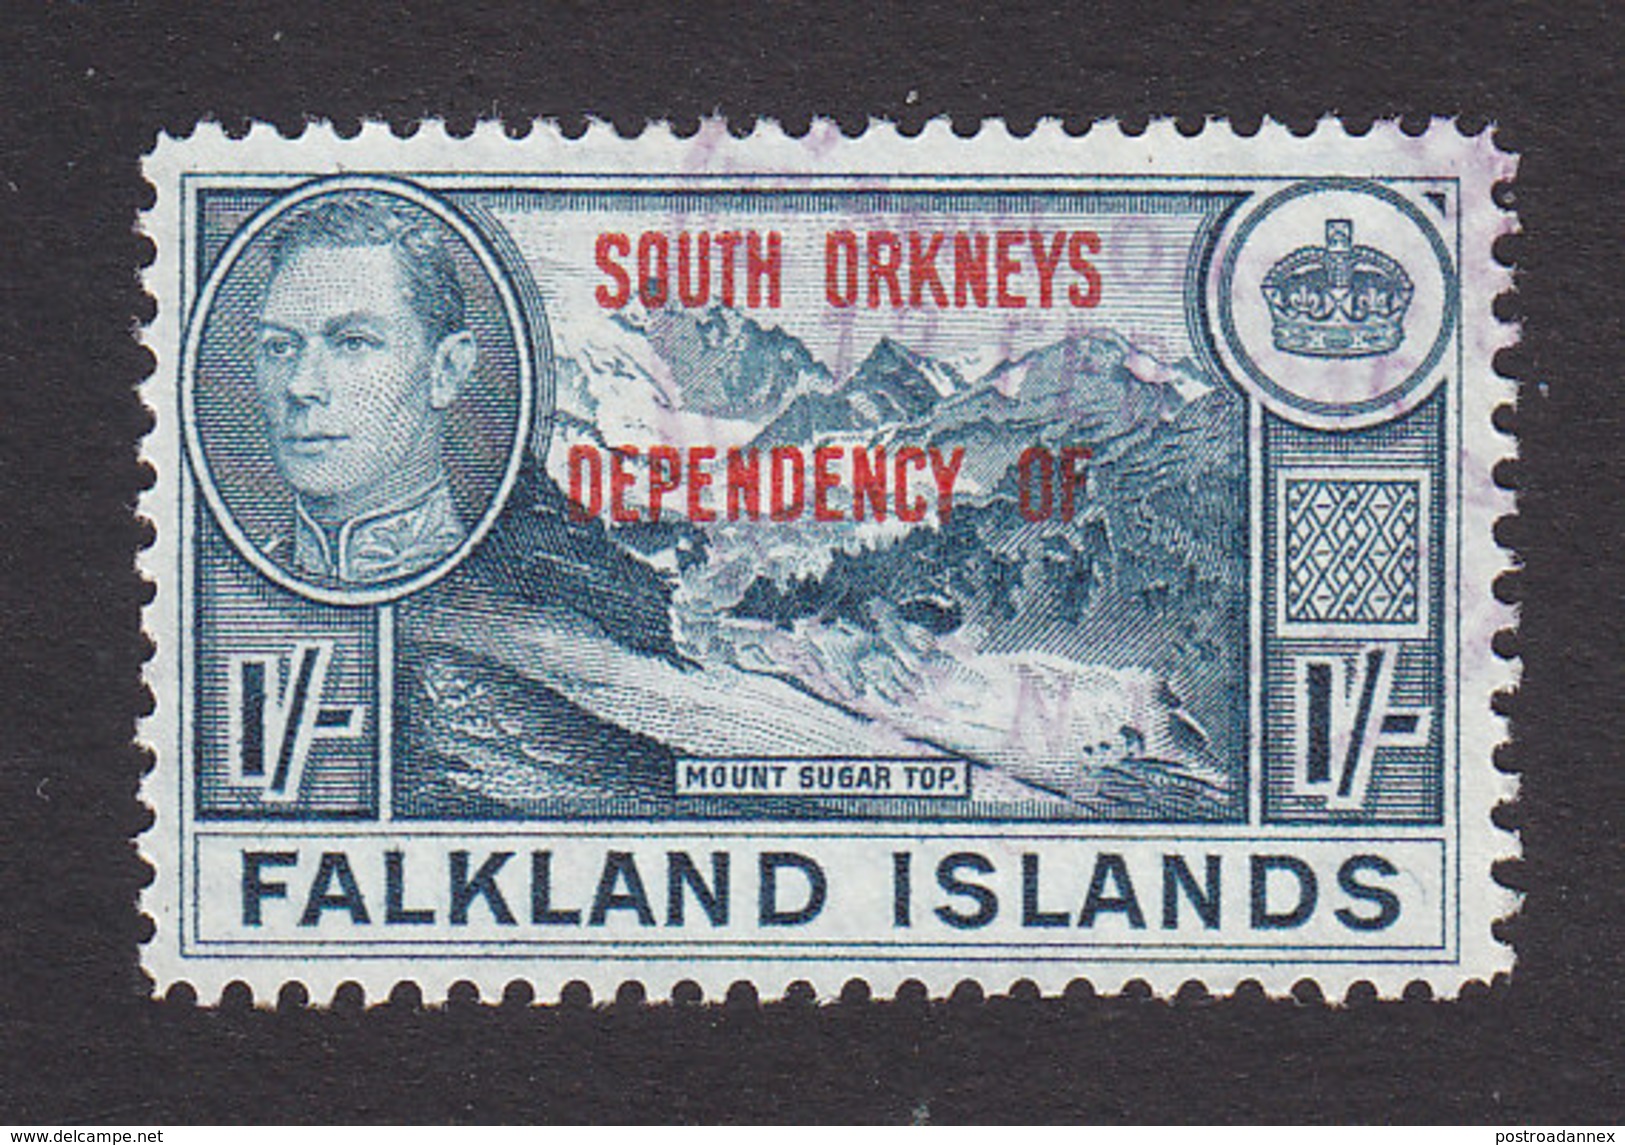 Falkland Islands, South Orkneys, Scott #4L8, Used, Ship Overprinted, Issued 1944 - Islas Malvinas